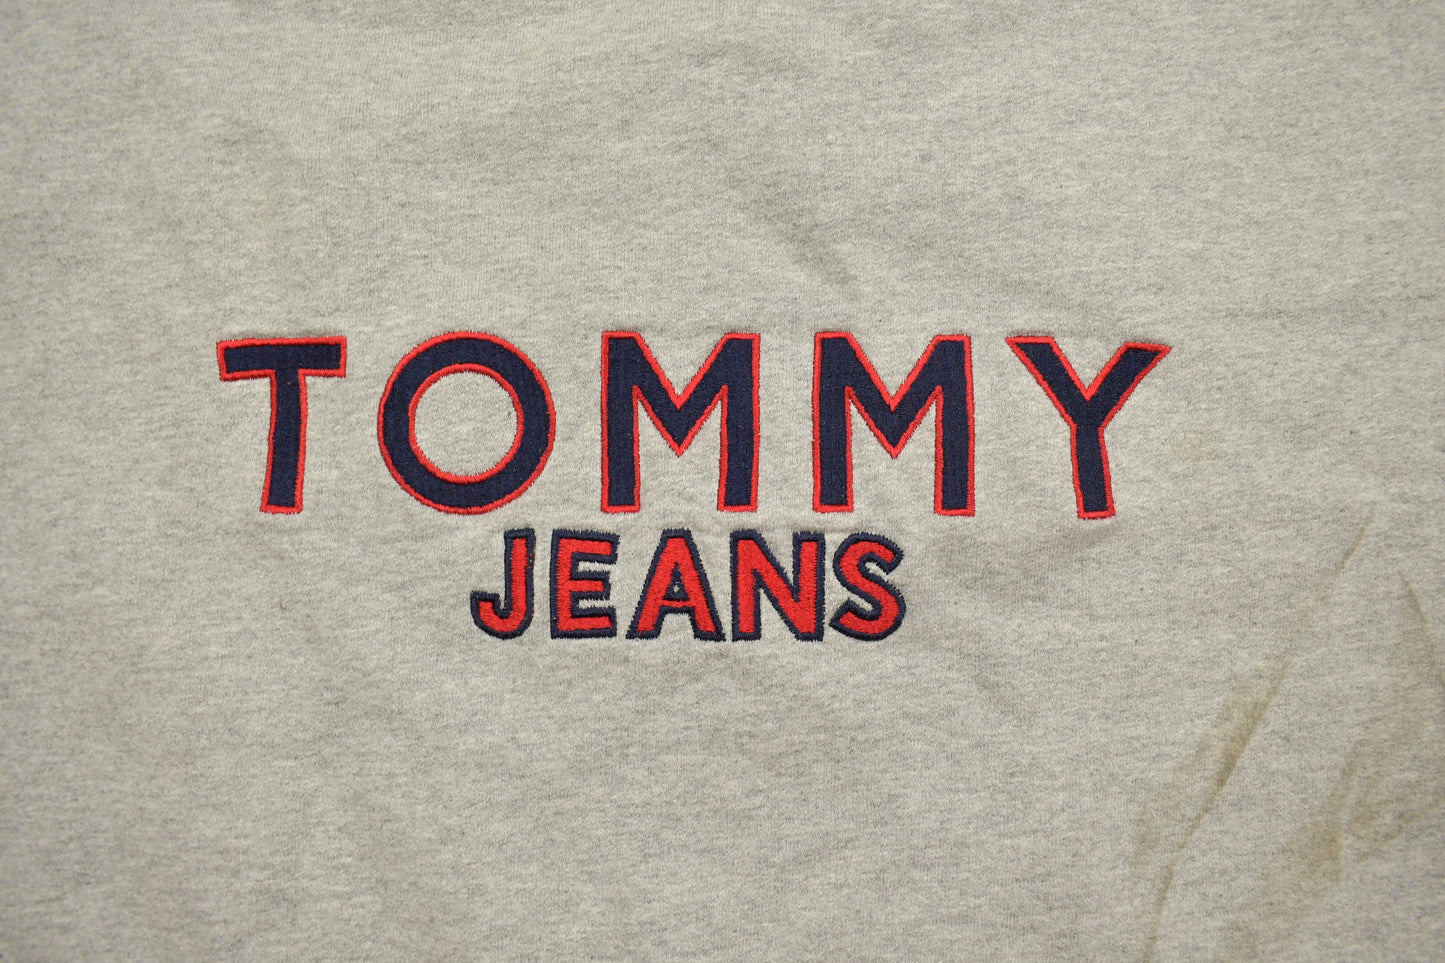 Vintage 1990s Grey Tommy Jeans Crewneck Sweatshirt / 90s Crewneck / Made In Mexico / Streetwear / 90s Blank/